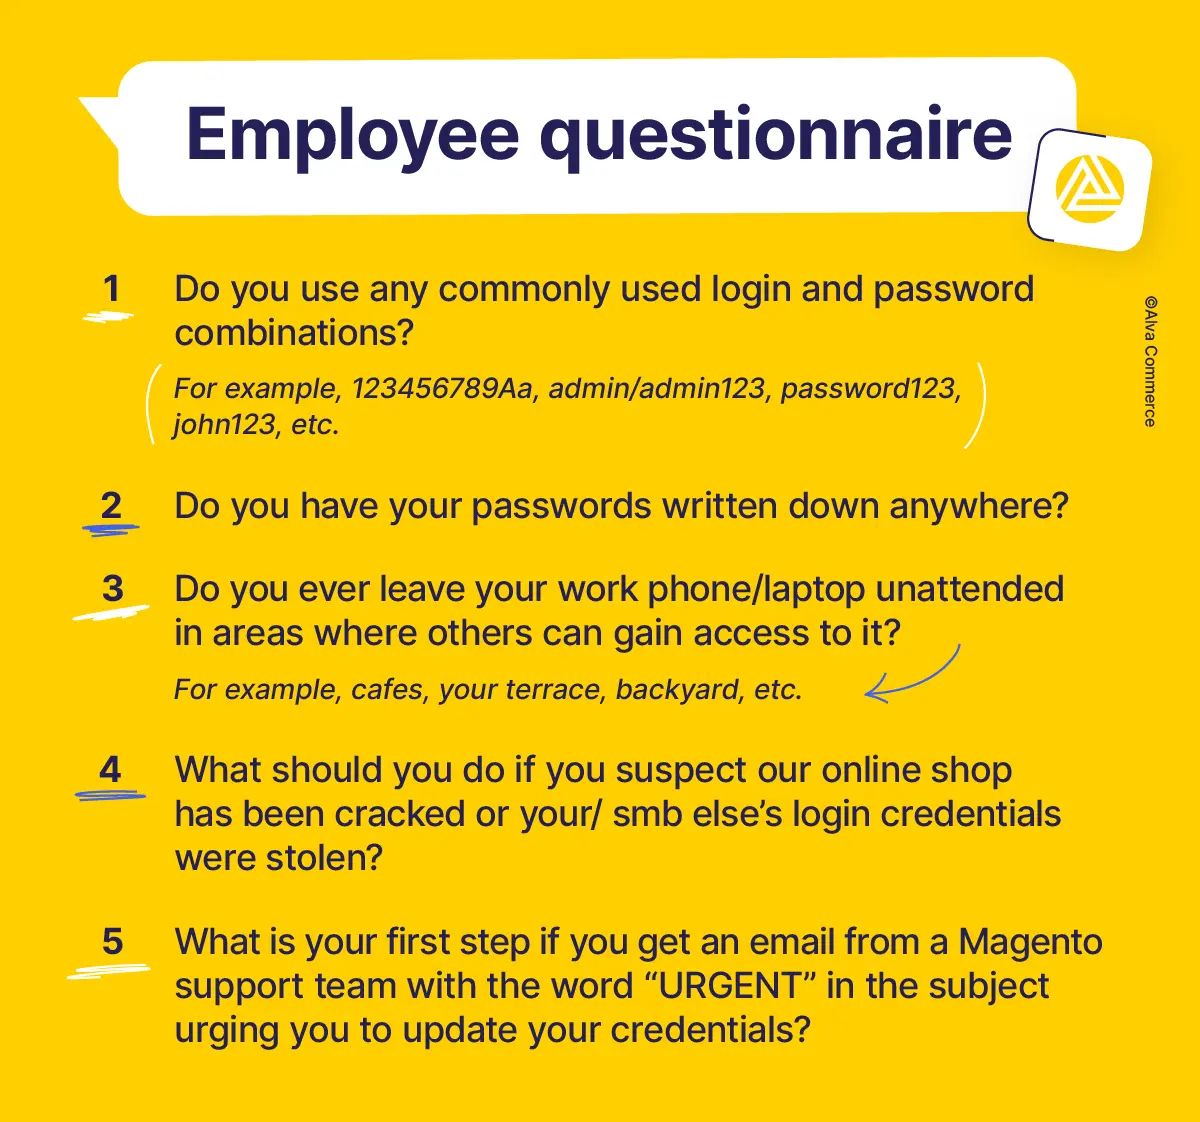 Employee questionnaire